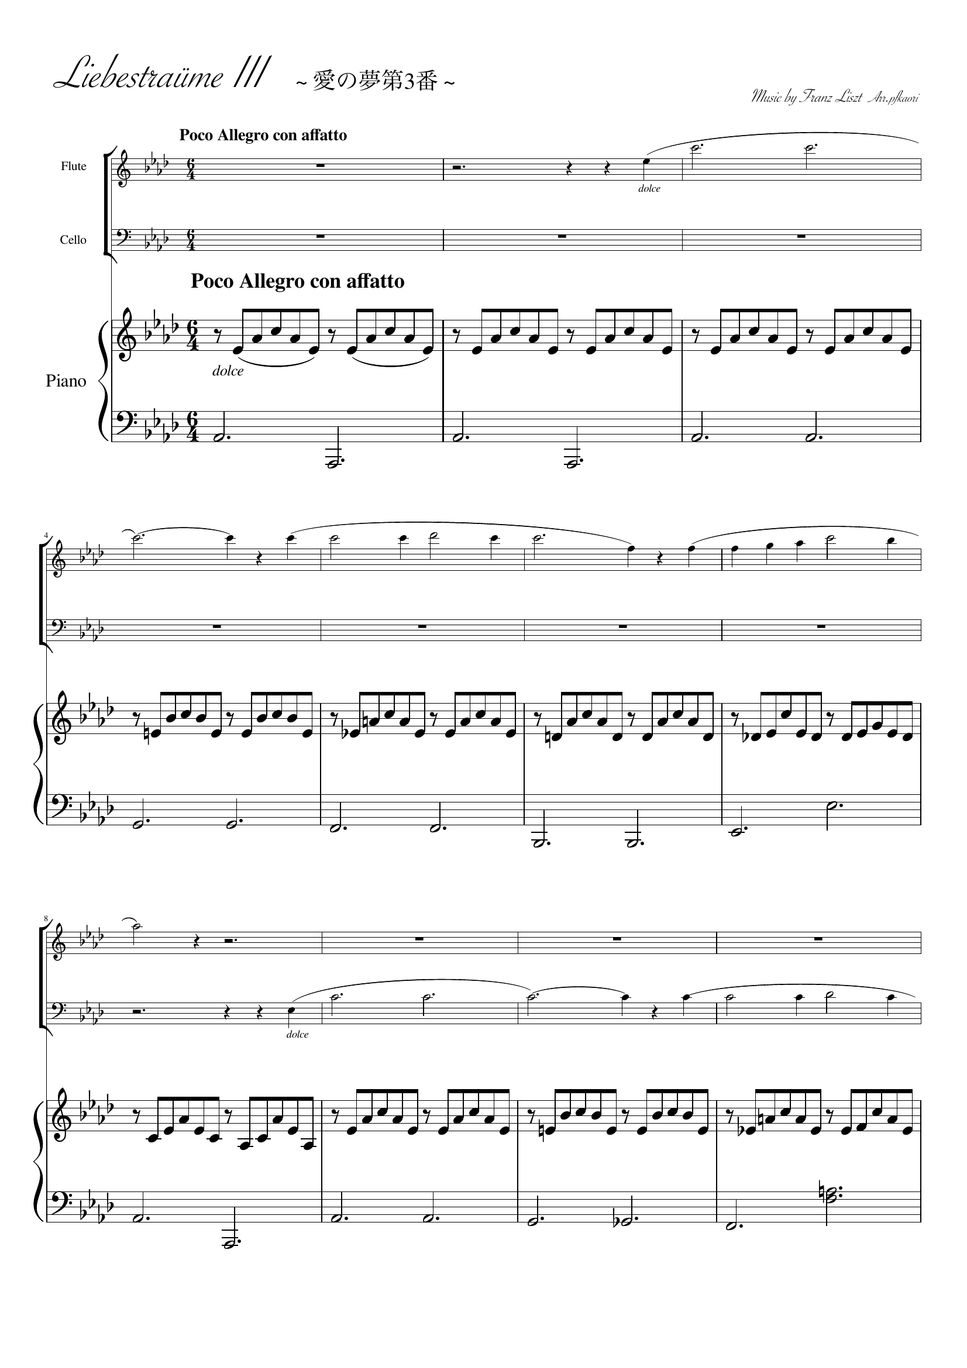 Franz Liszt - Liebestraum No. 3 (As・Piano trio / flute & cello) by pfkaori